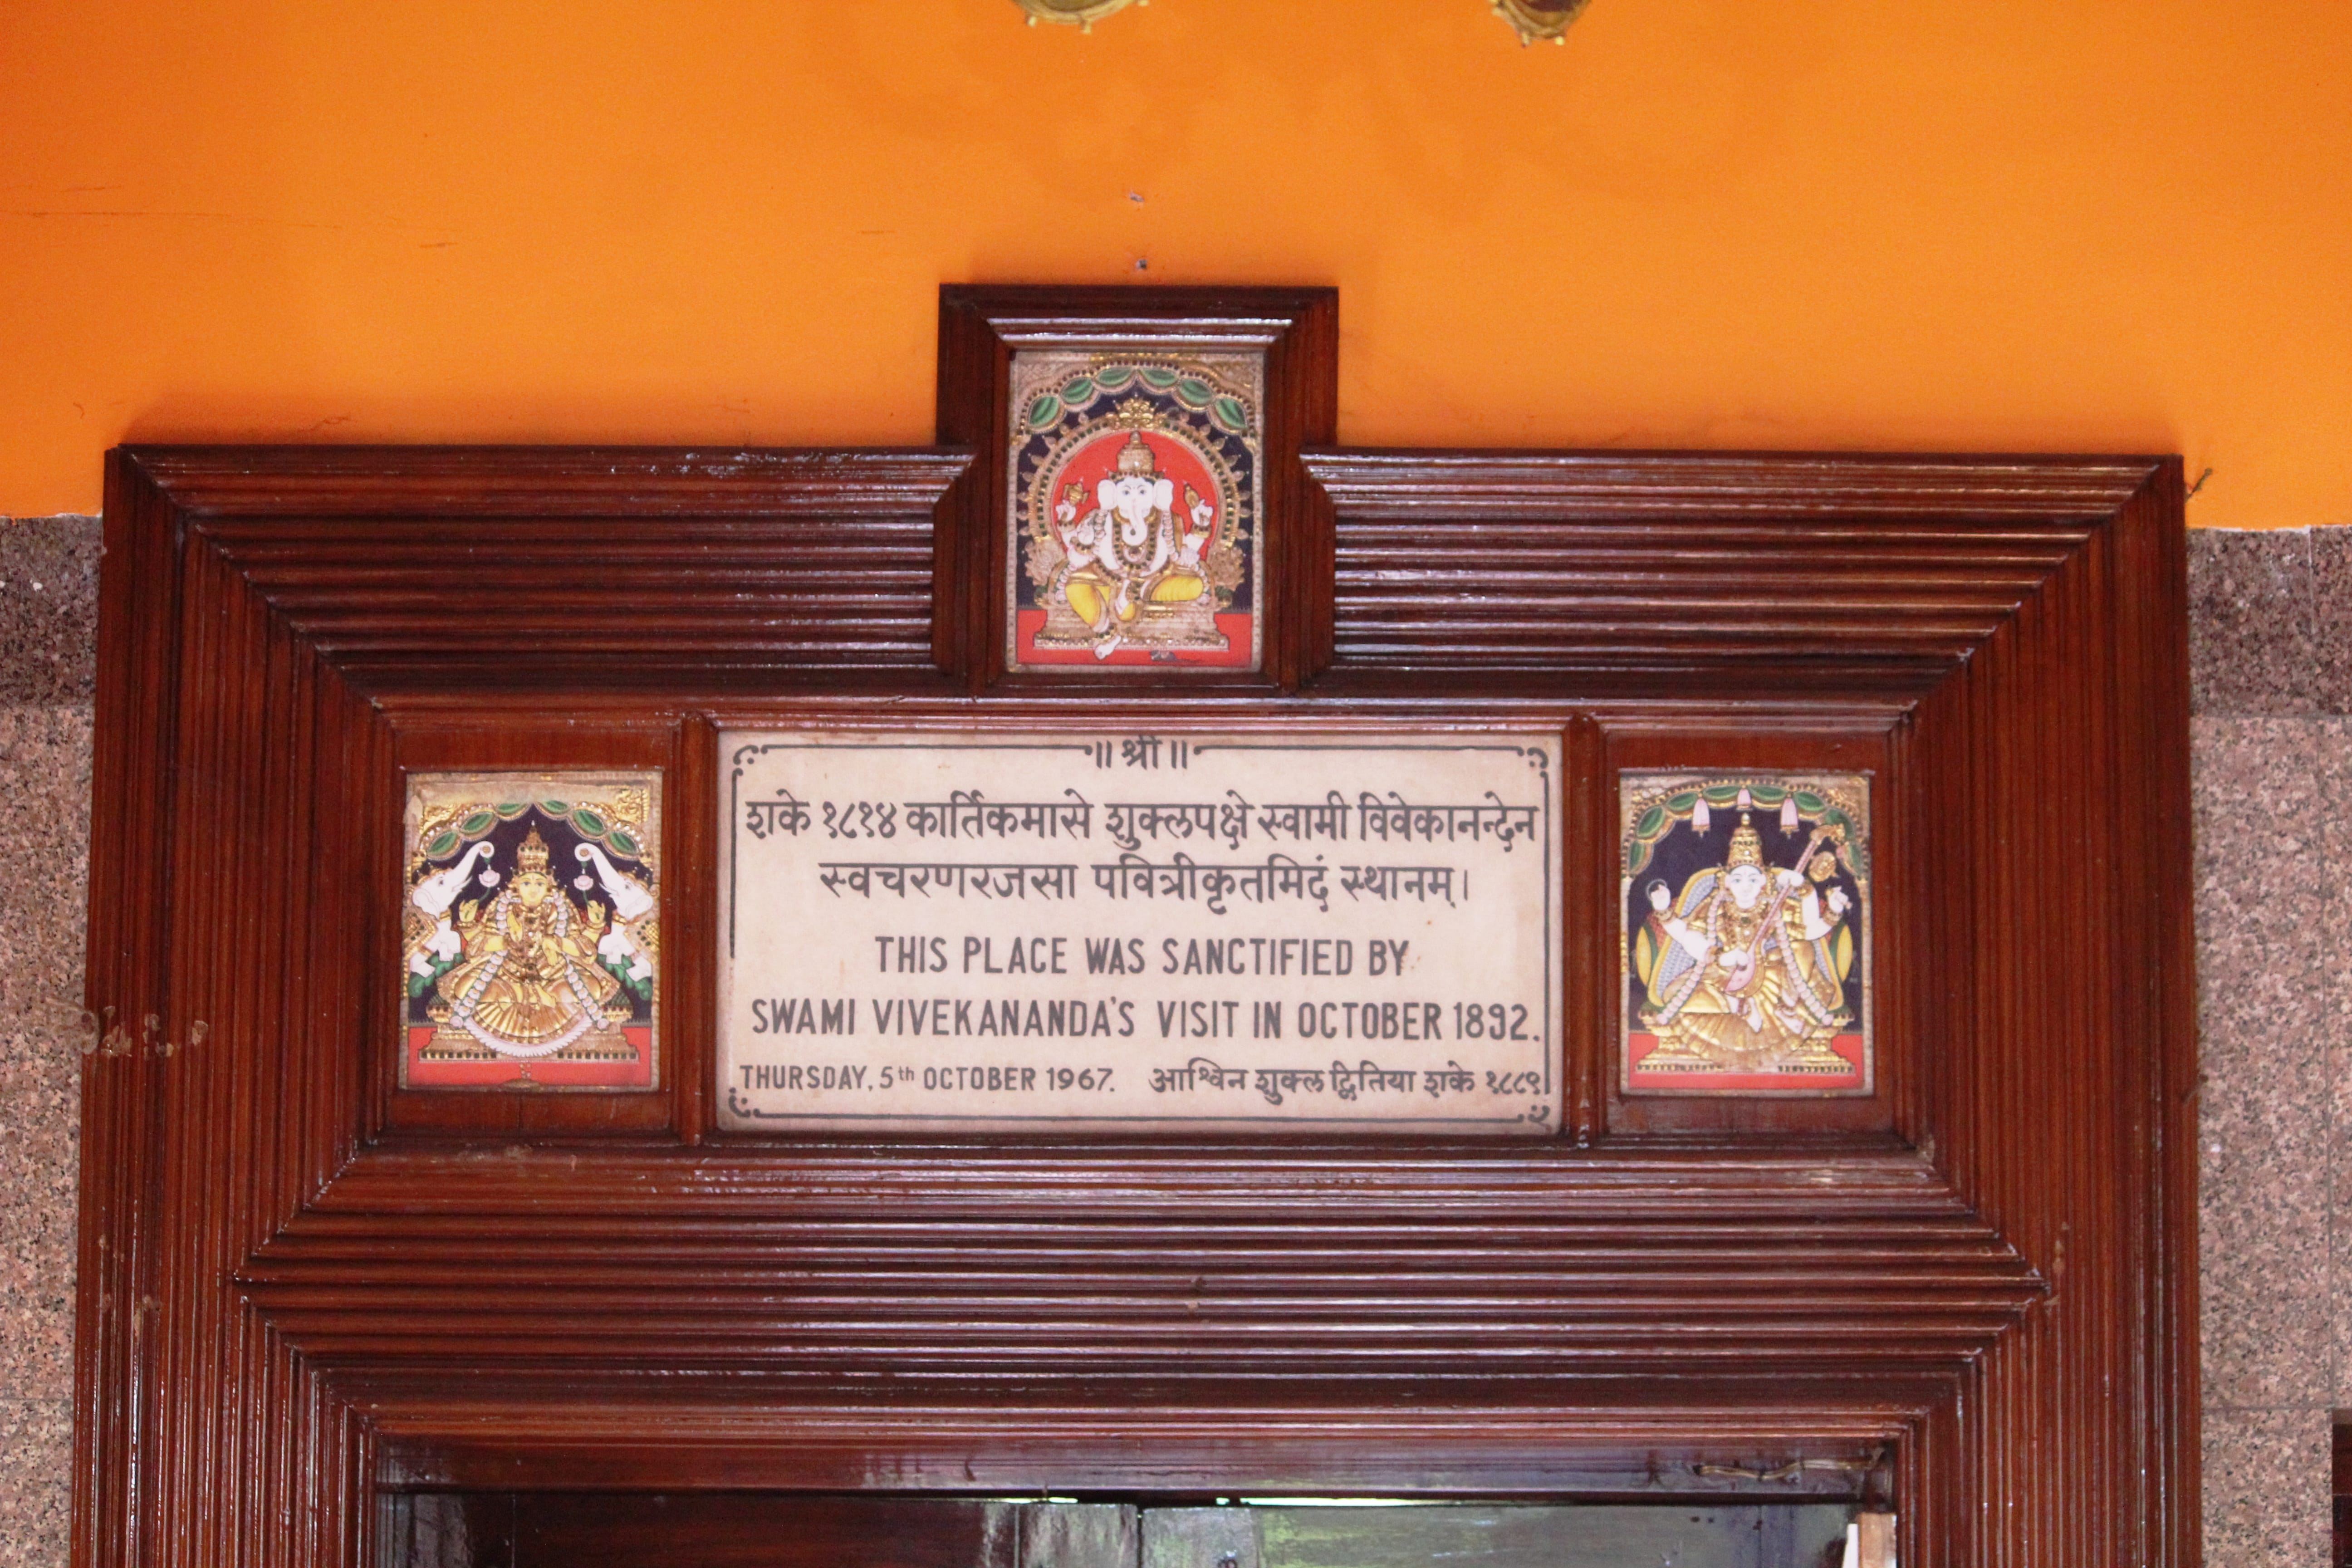 Shri Swami Vivekanad visited this house